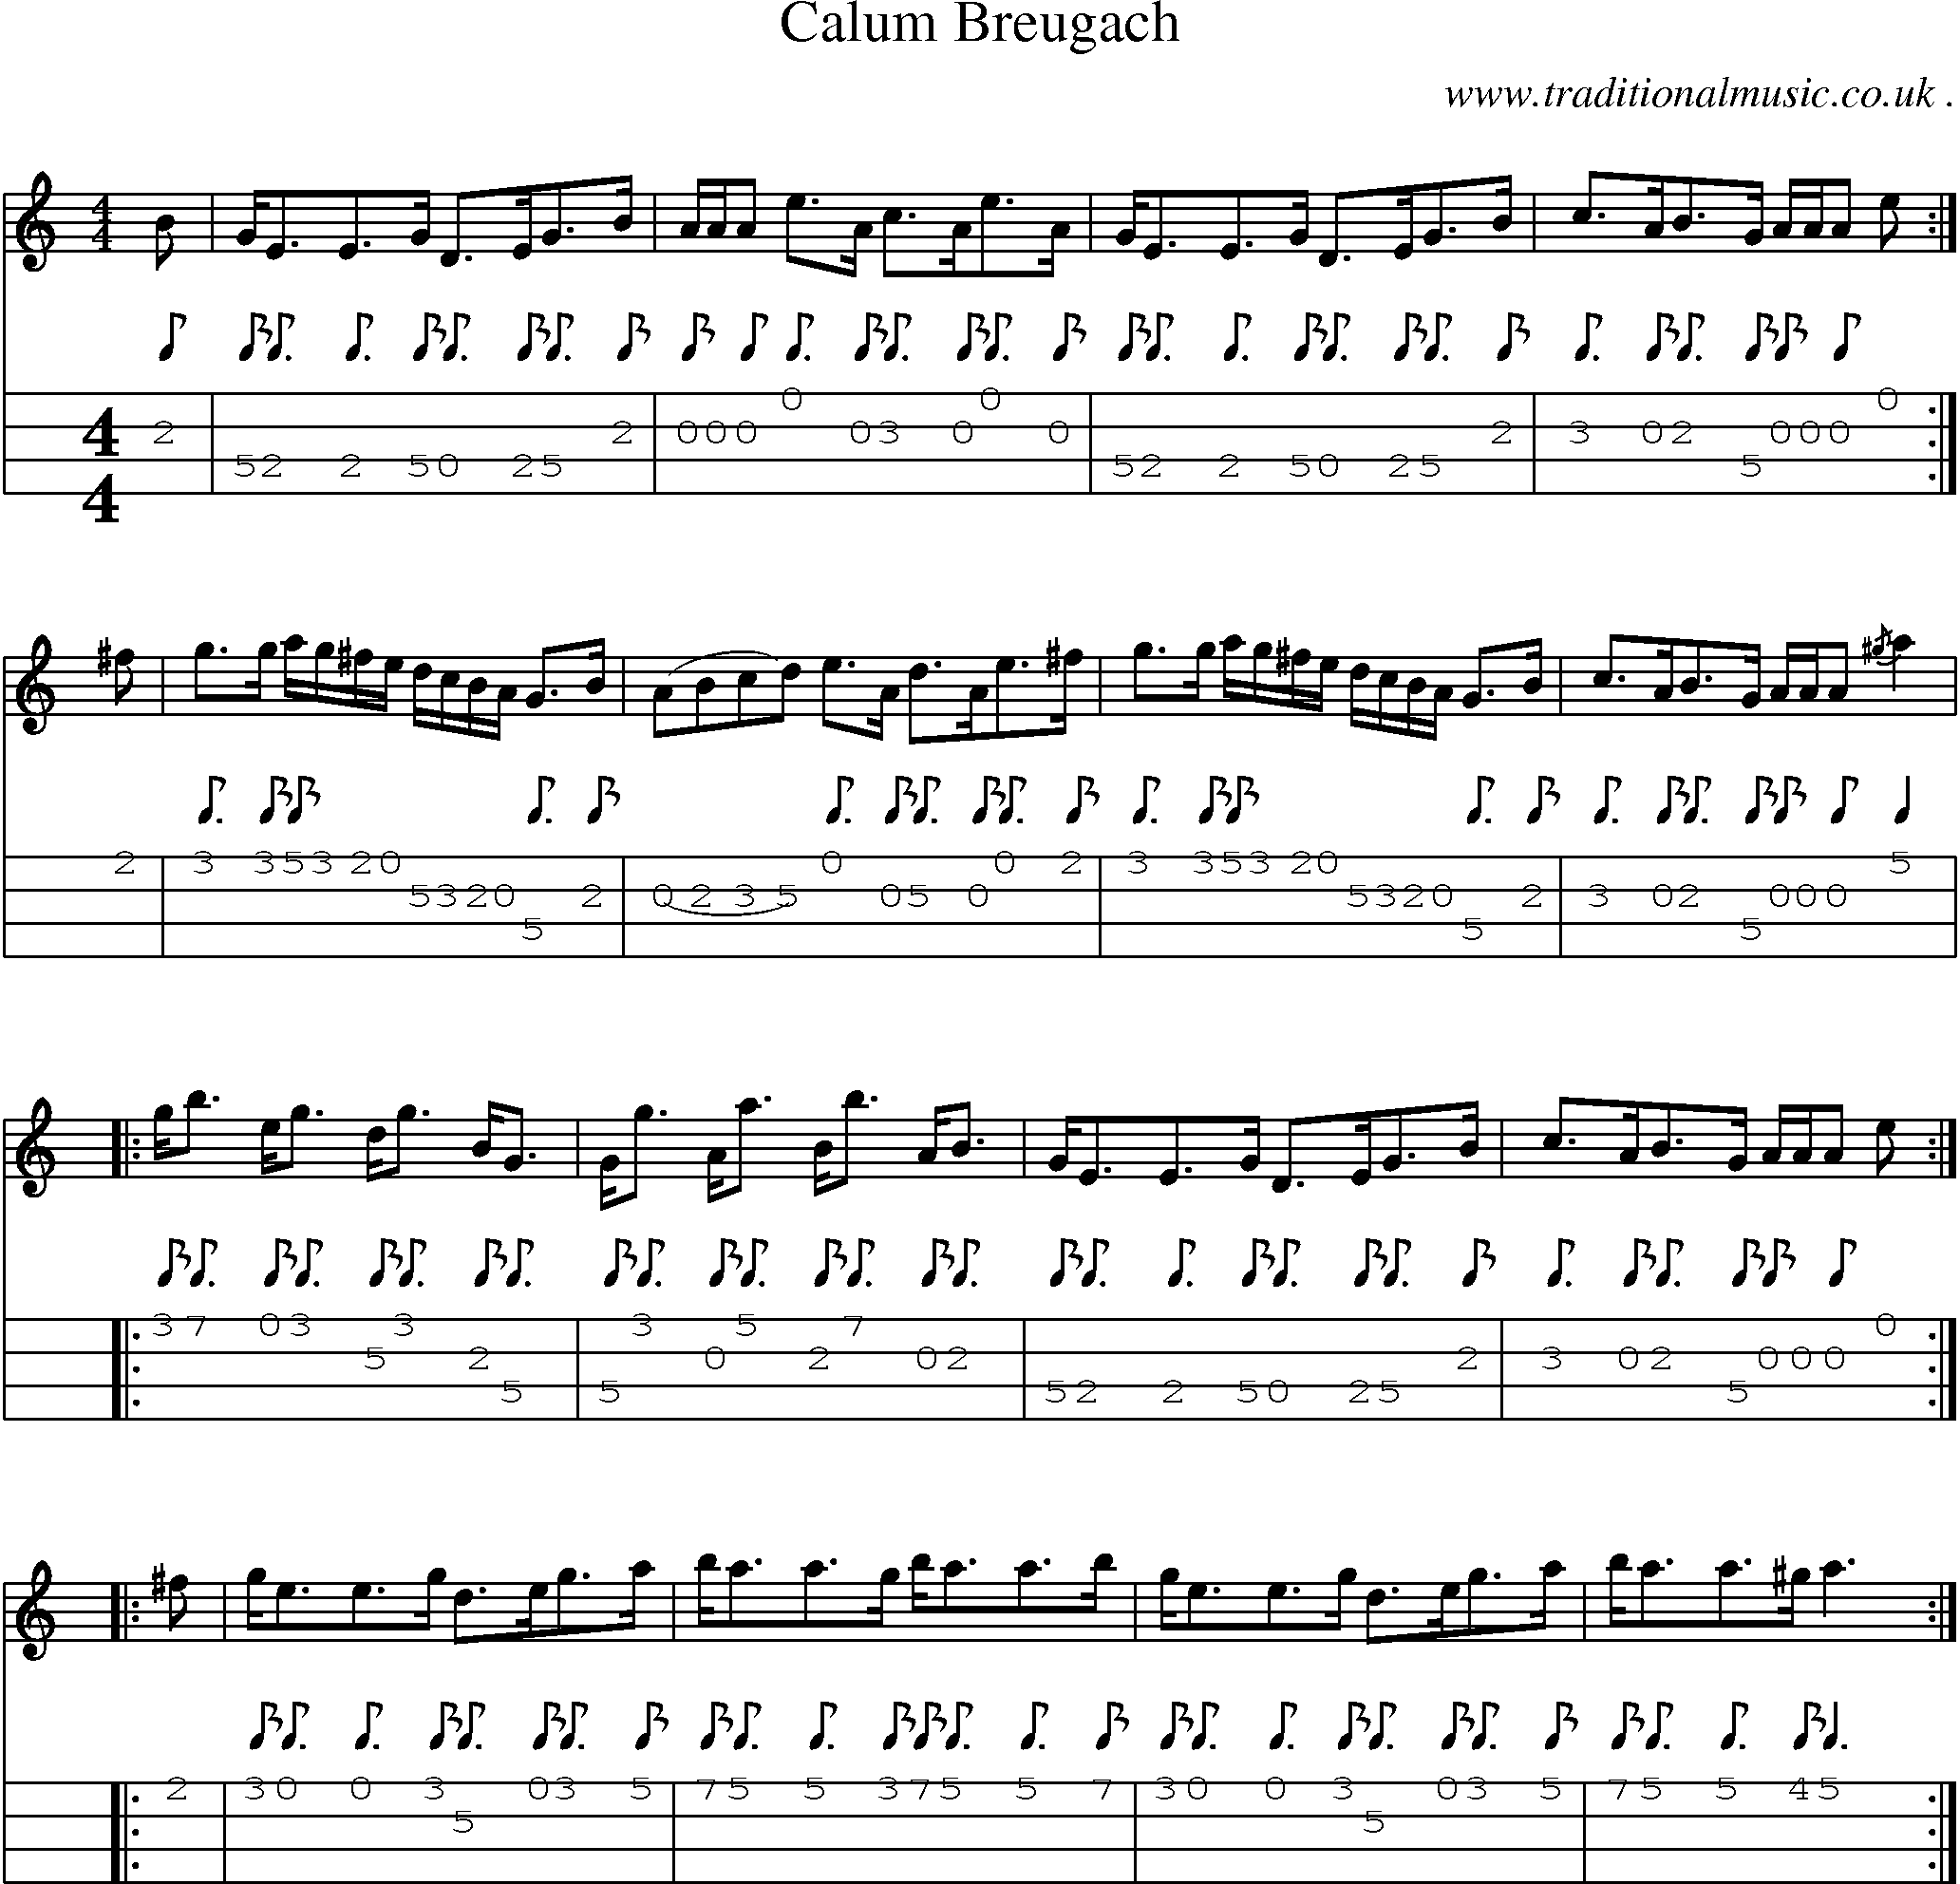 Sheet-music  score, Chords and Mandolin Tabs for Calum Breugach